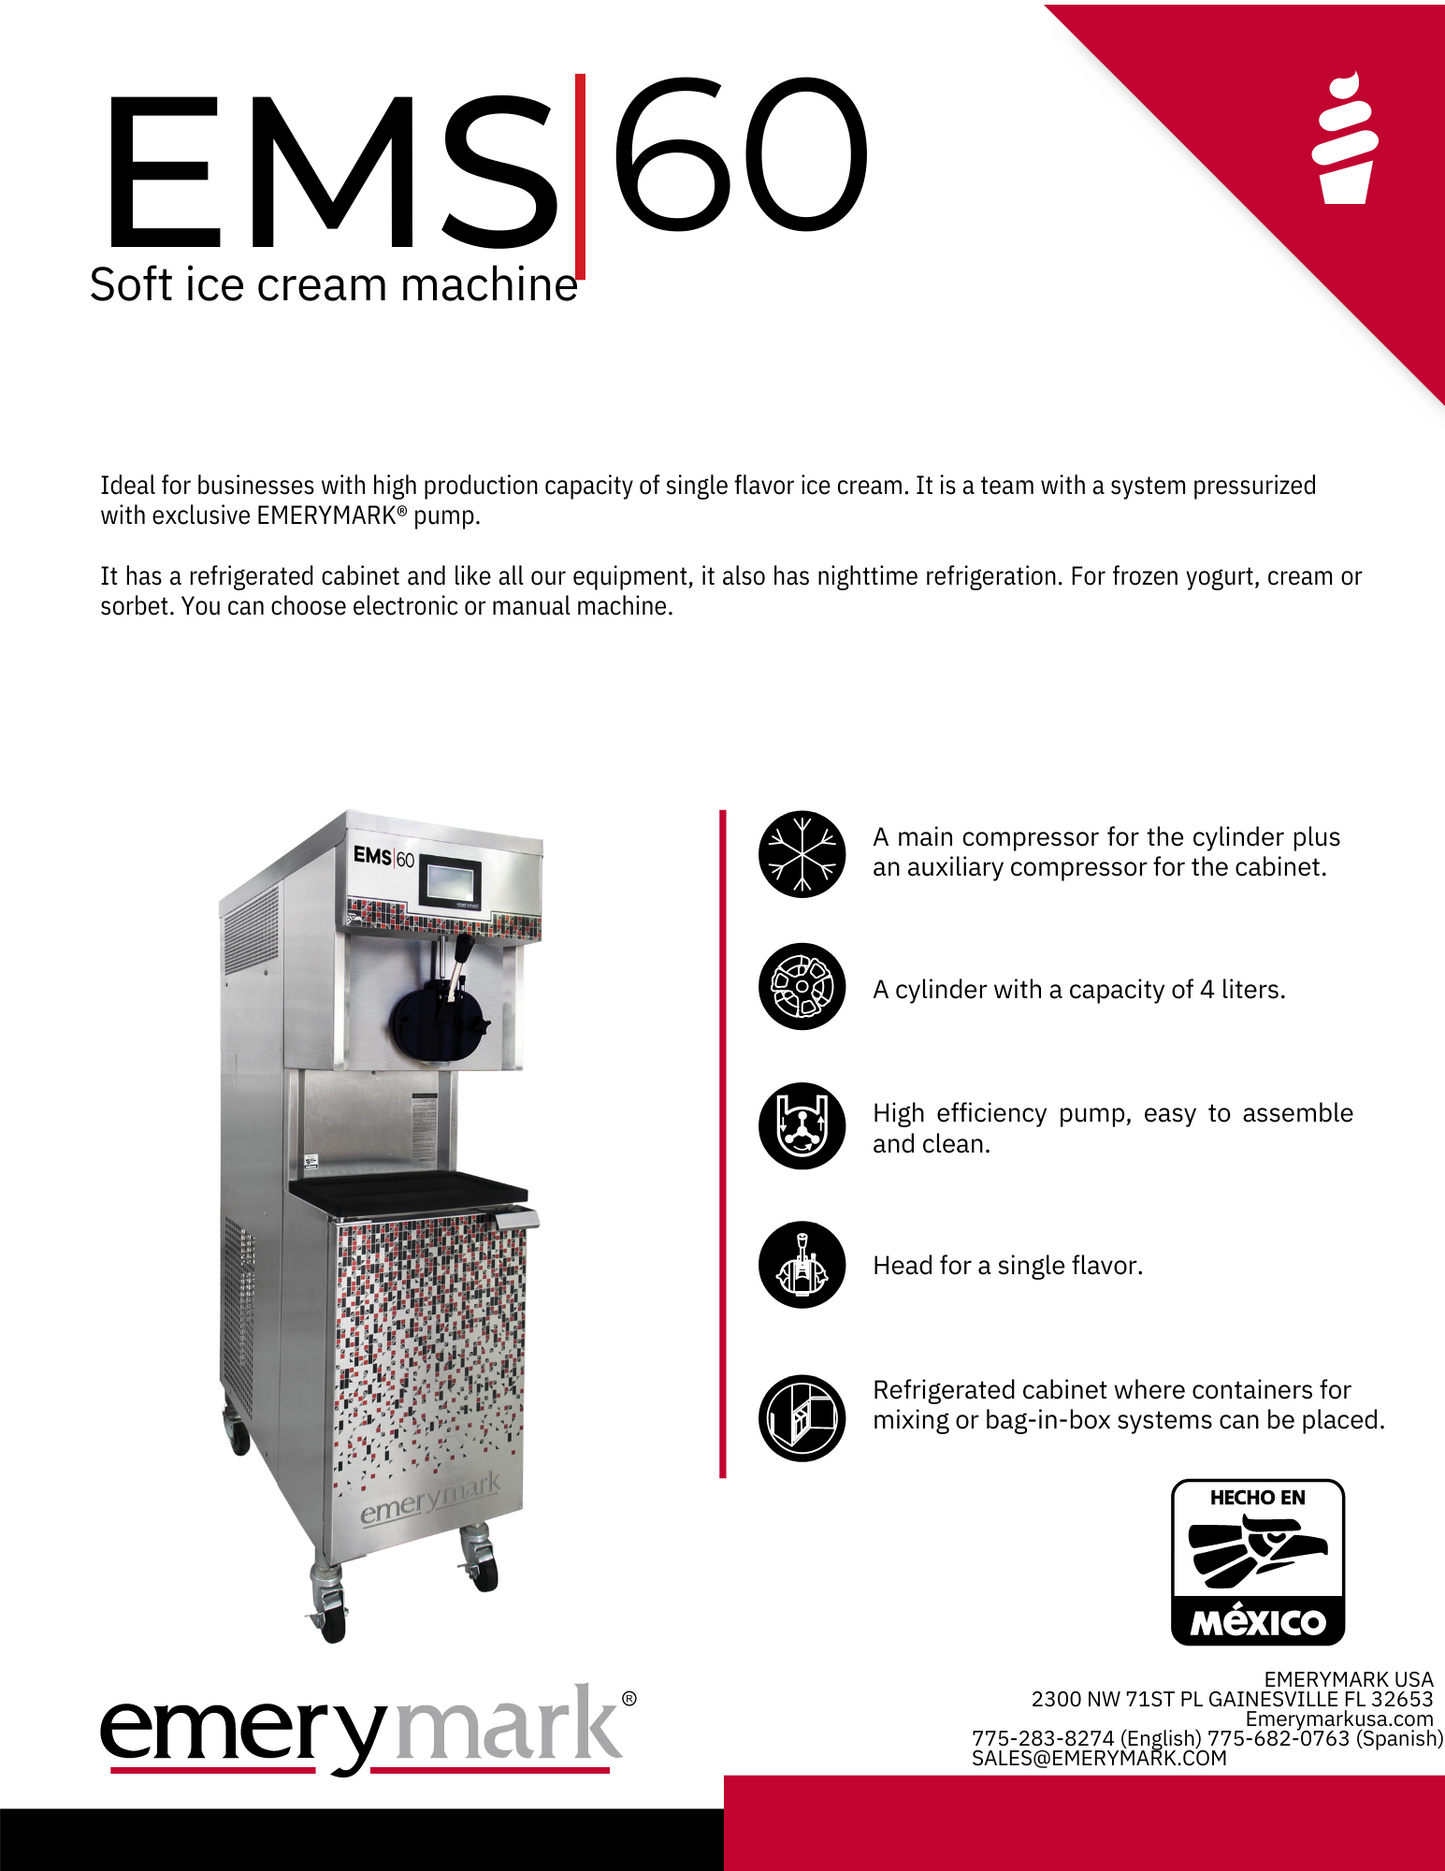 EMS60 Soft Serve Ice Cream Machine